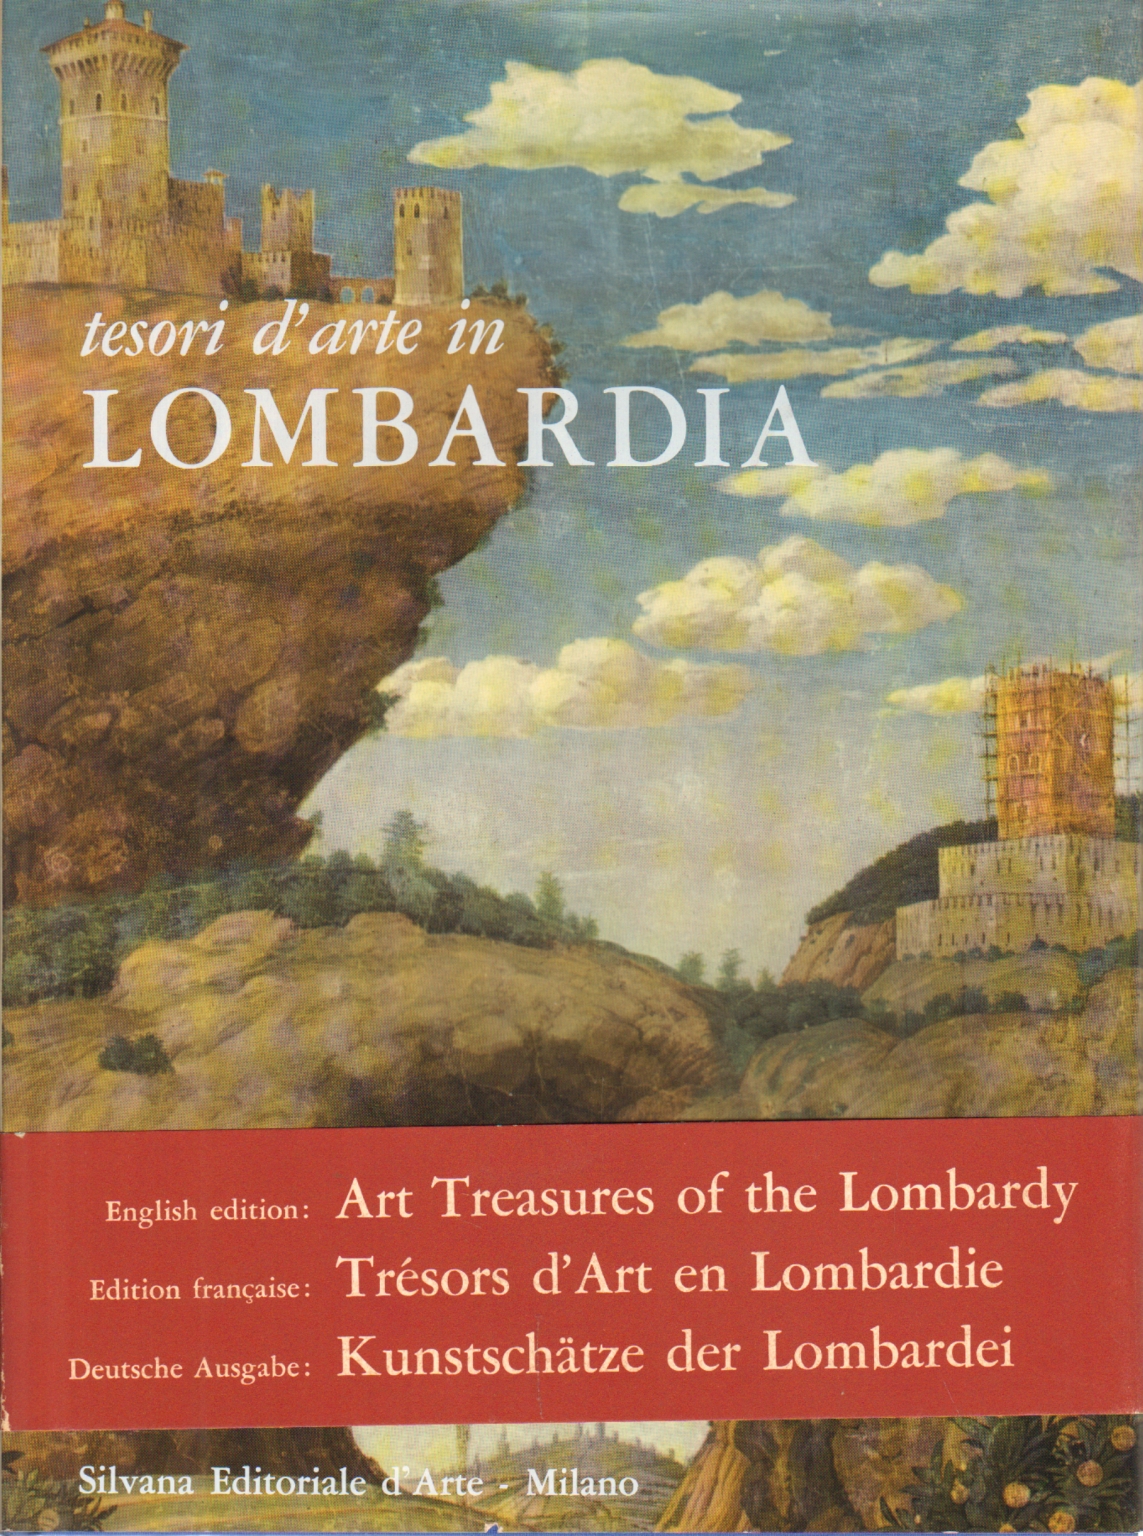 Art treasures in Lombardy, Mario Monteverdi